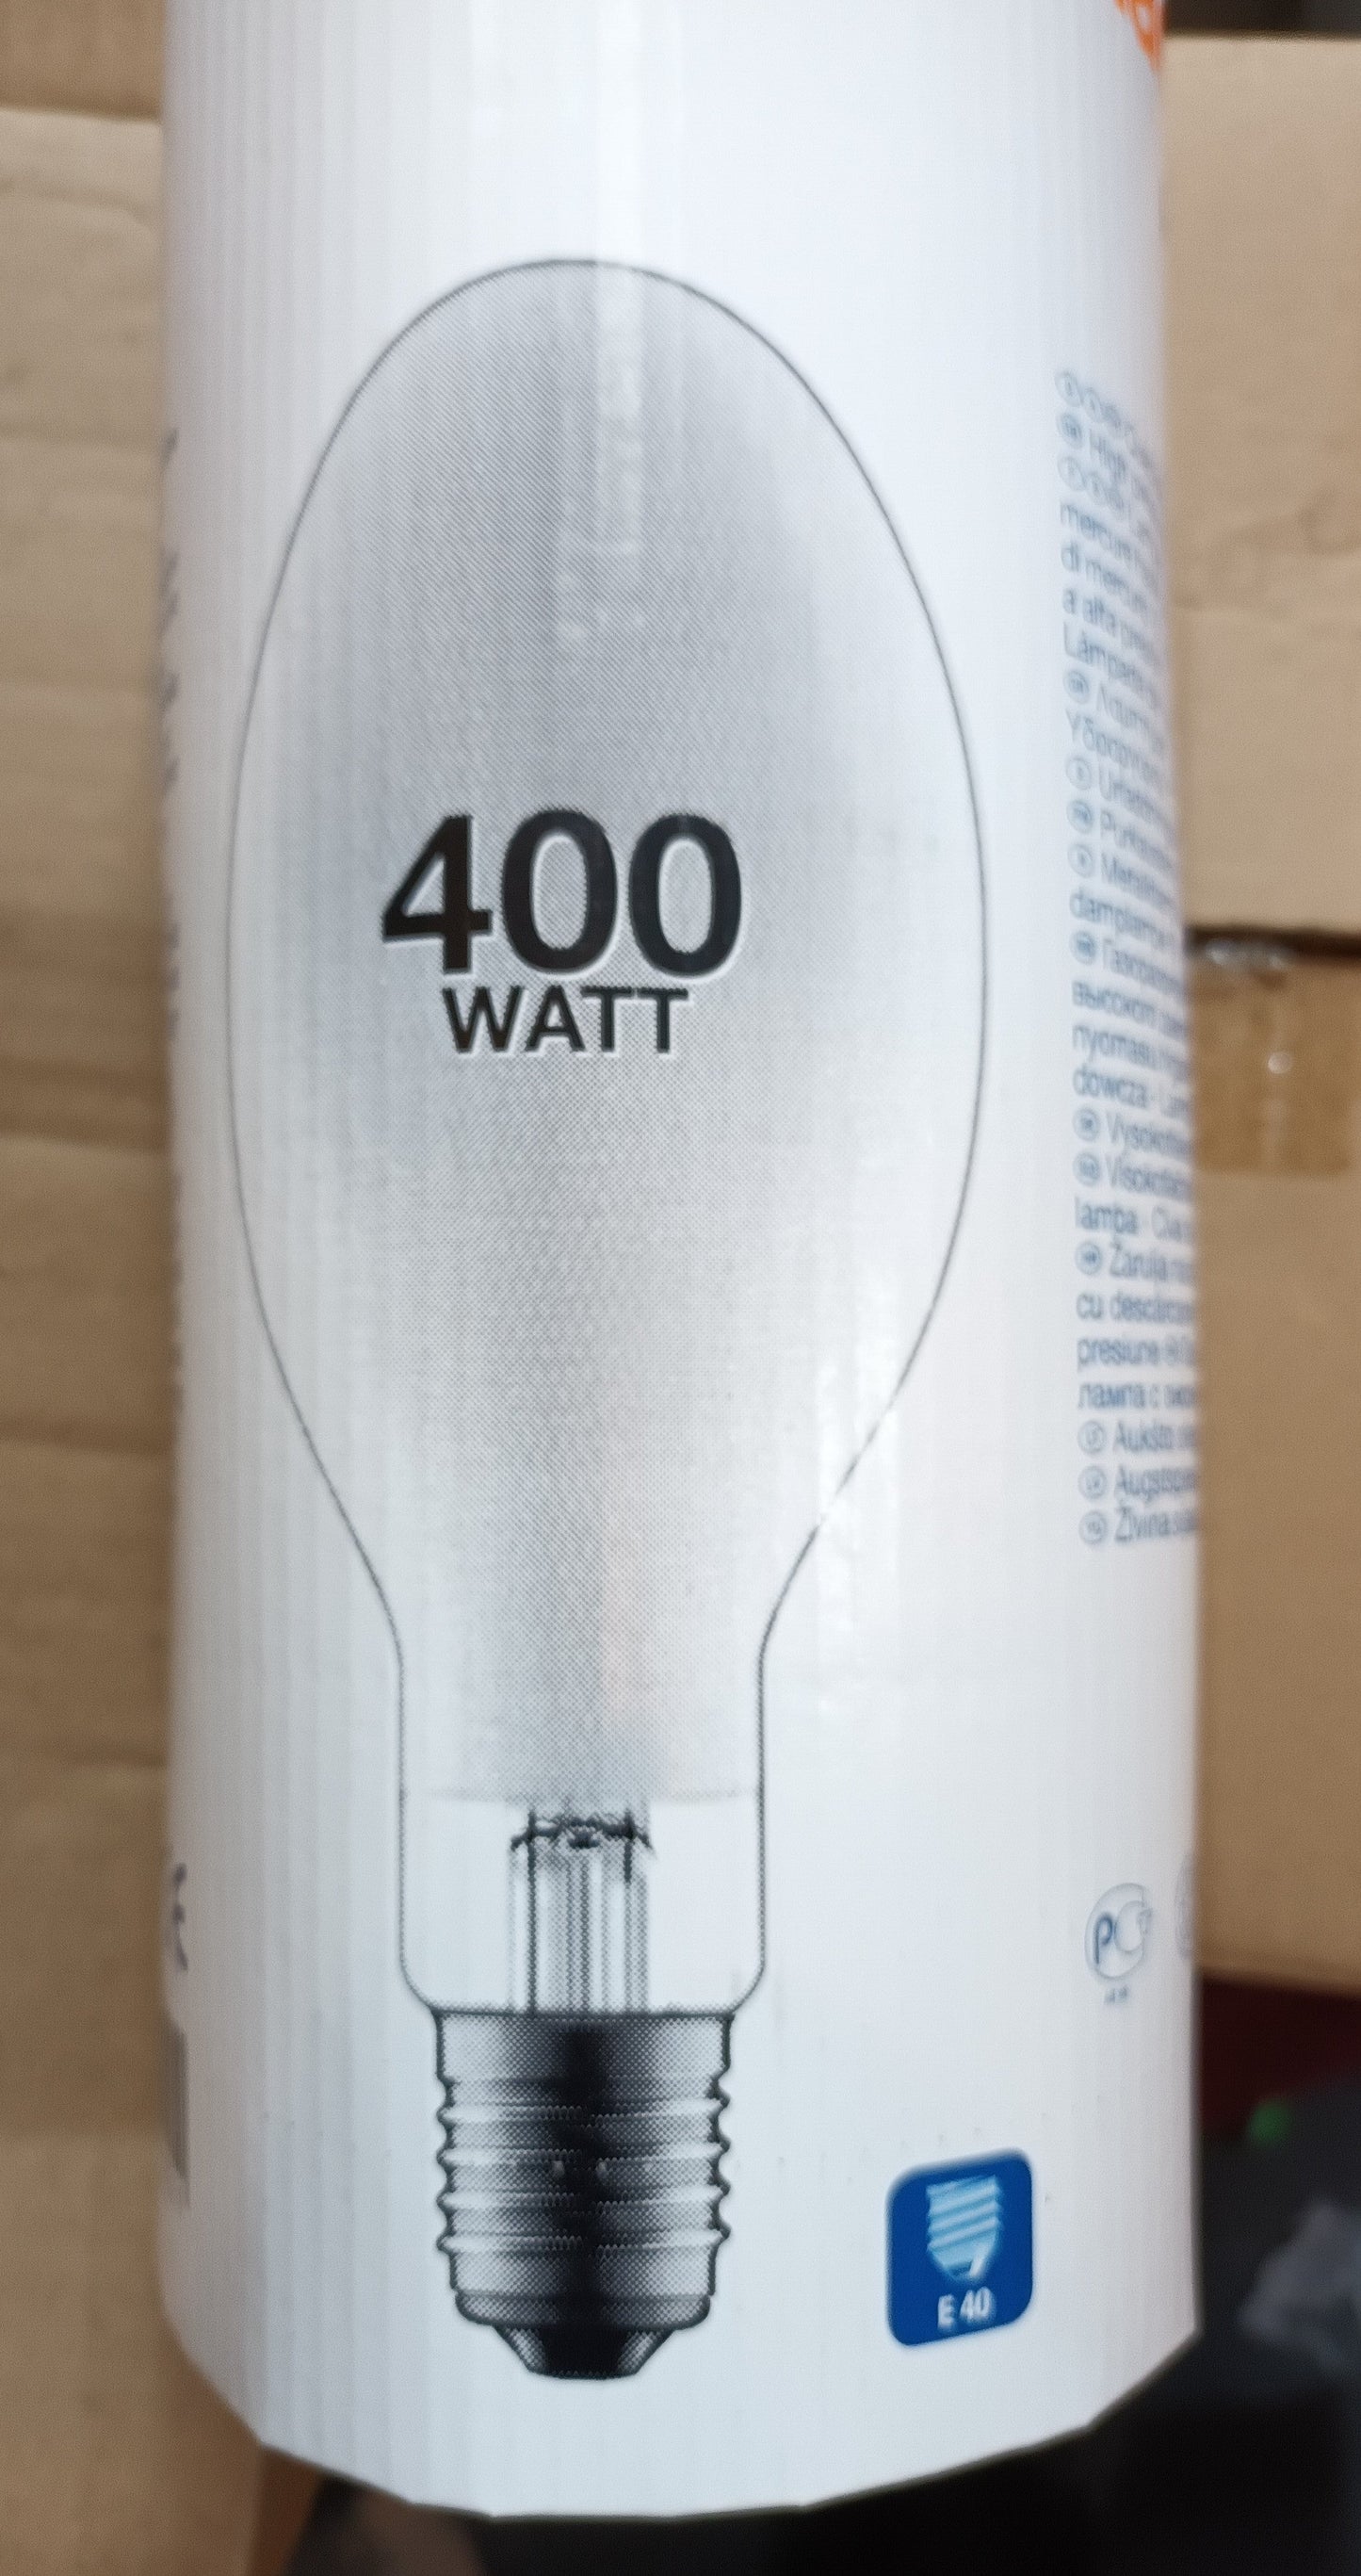 400 W / E40 mm Mercury Elliptical GEs-E40 Light Bulb